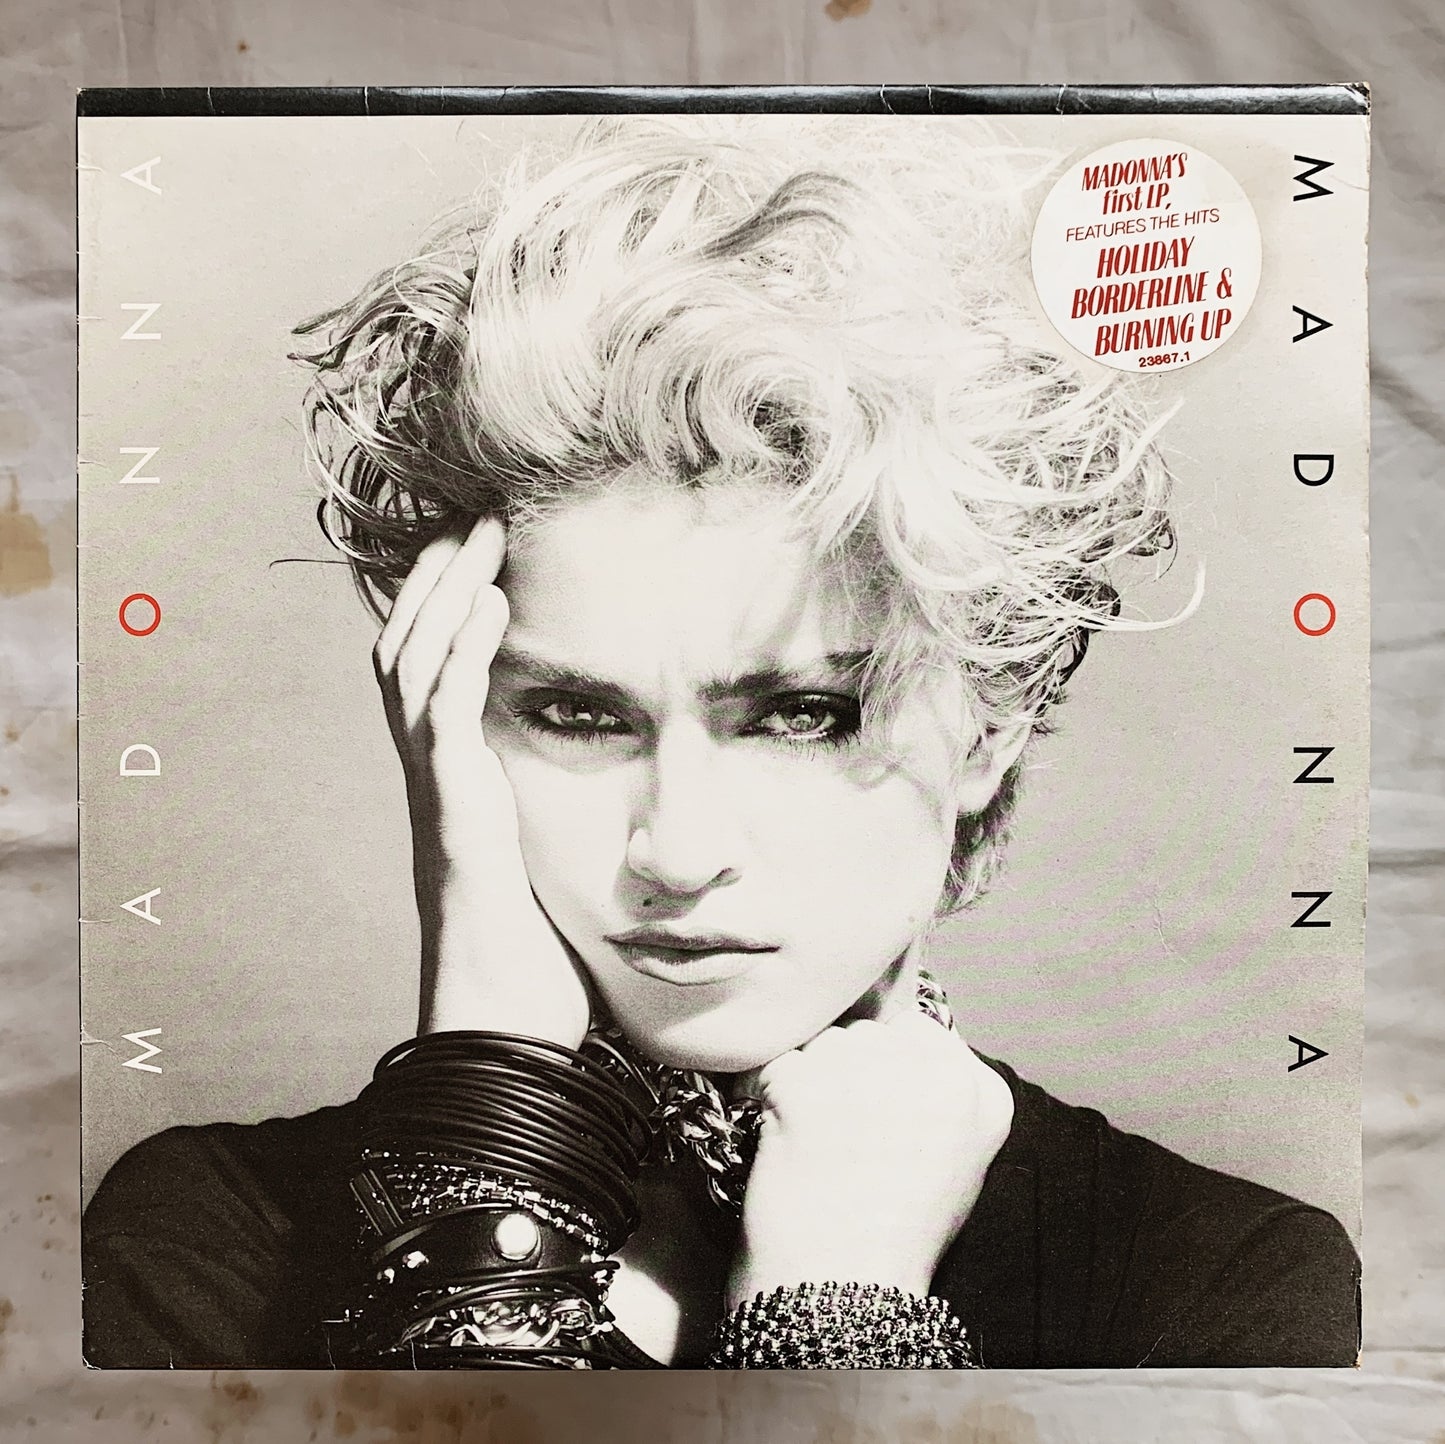 Madonna / Madonna LP